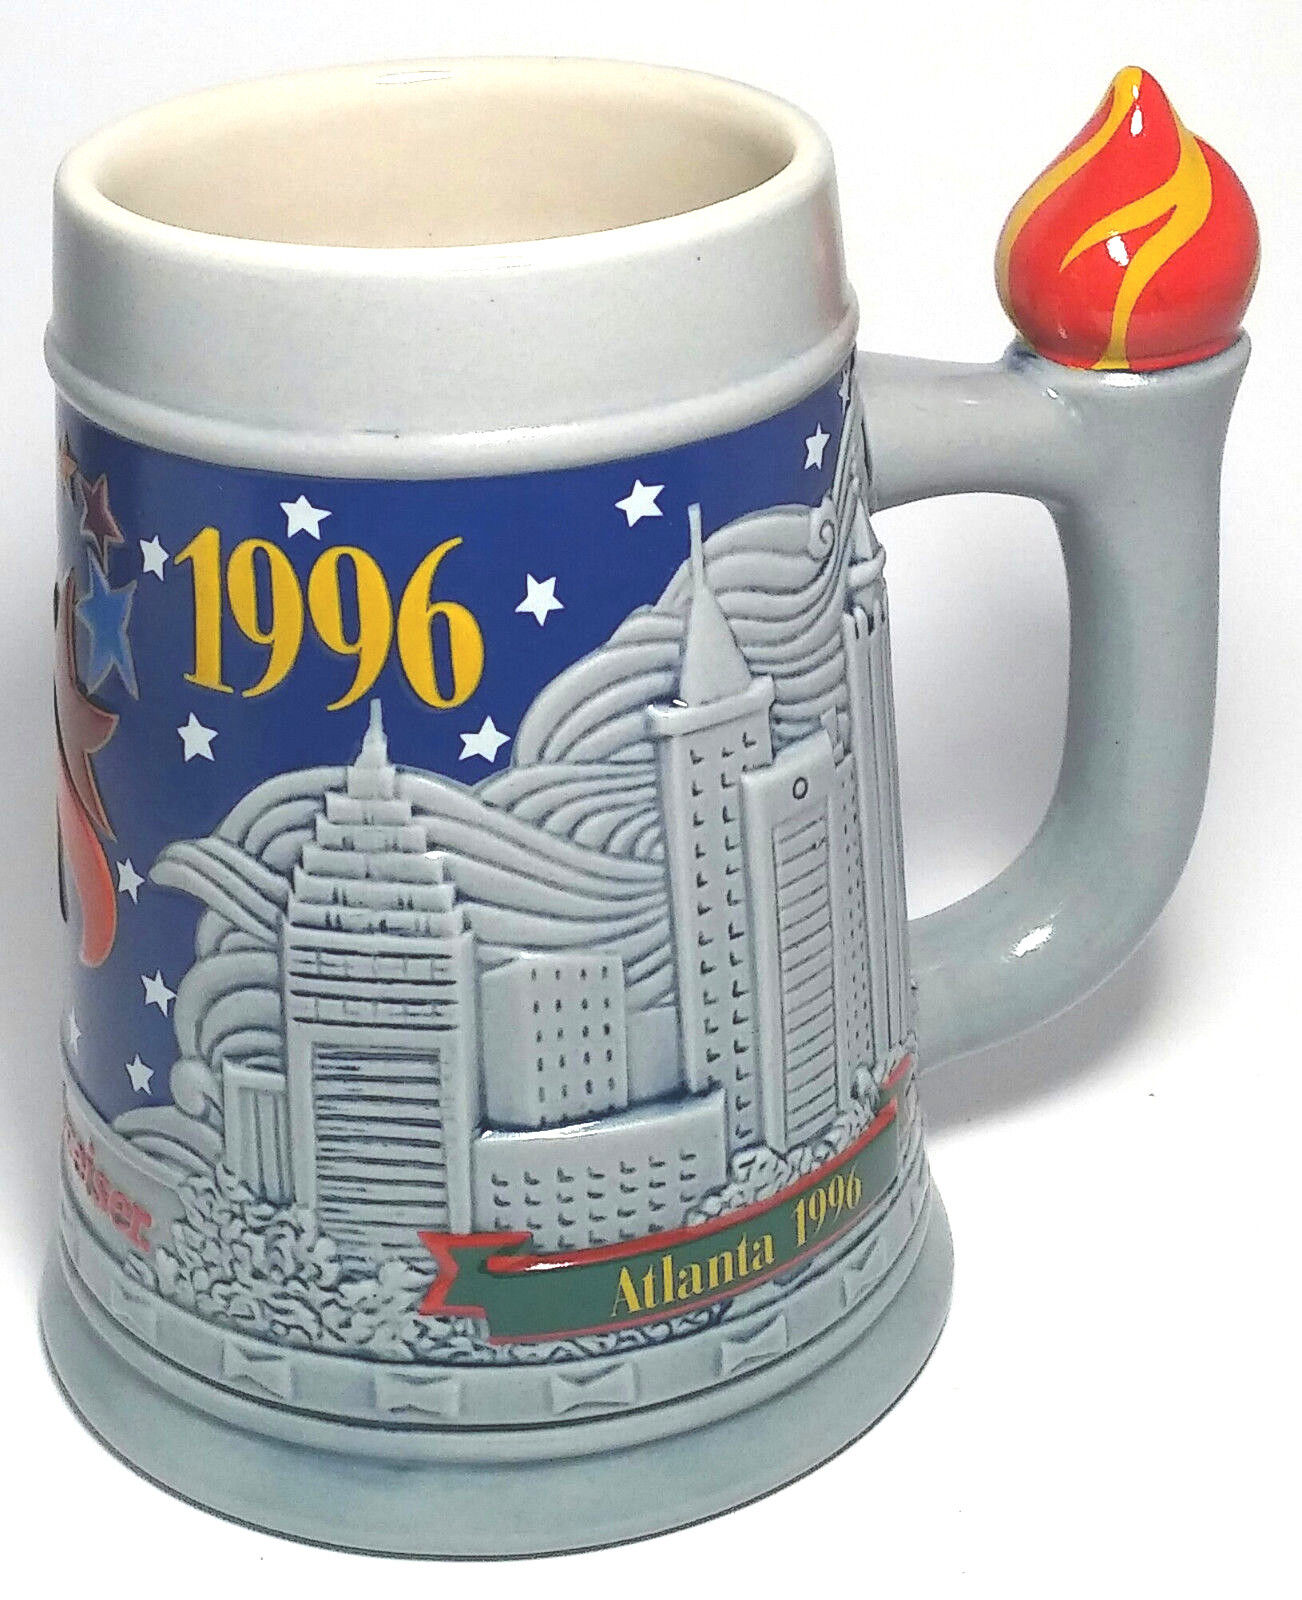 Budweiser Beer Mug Ceramic 1996 Summer Olympics Athens 1896 Cup 25 oz